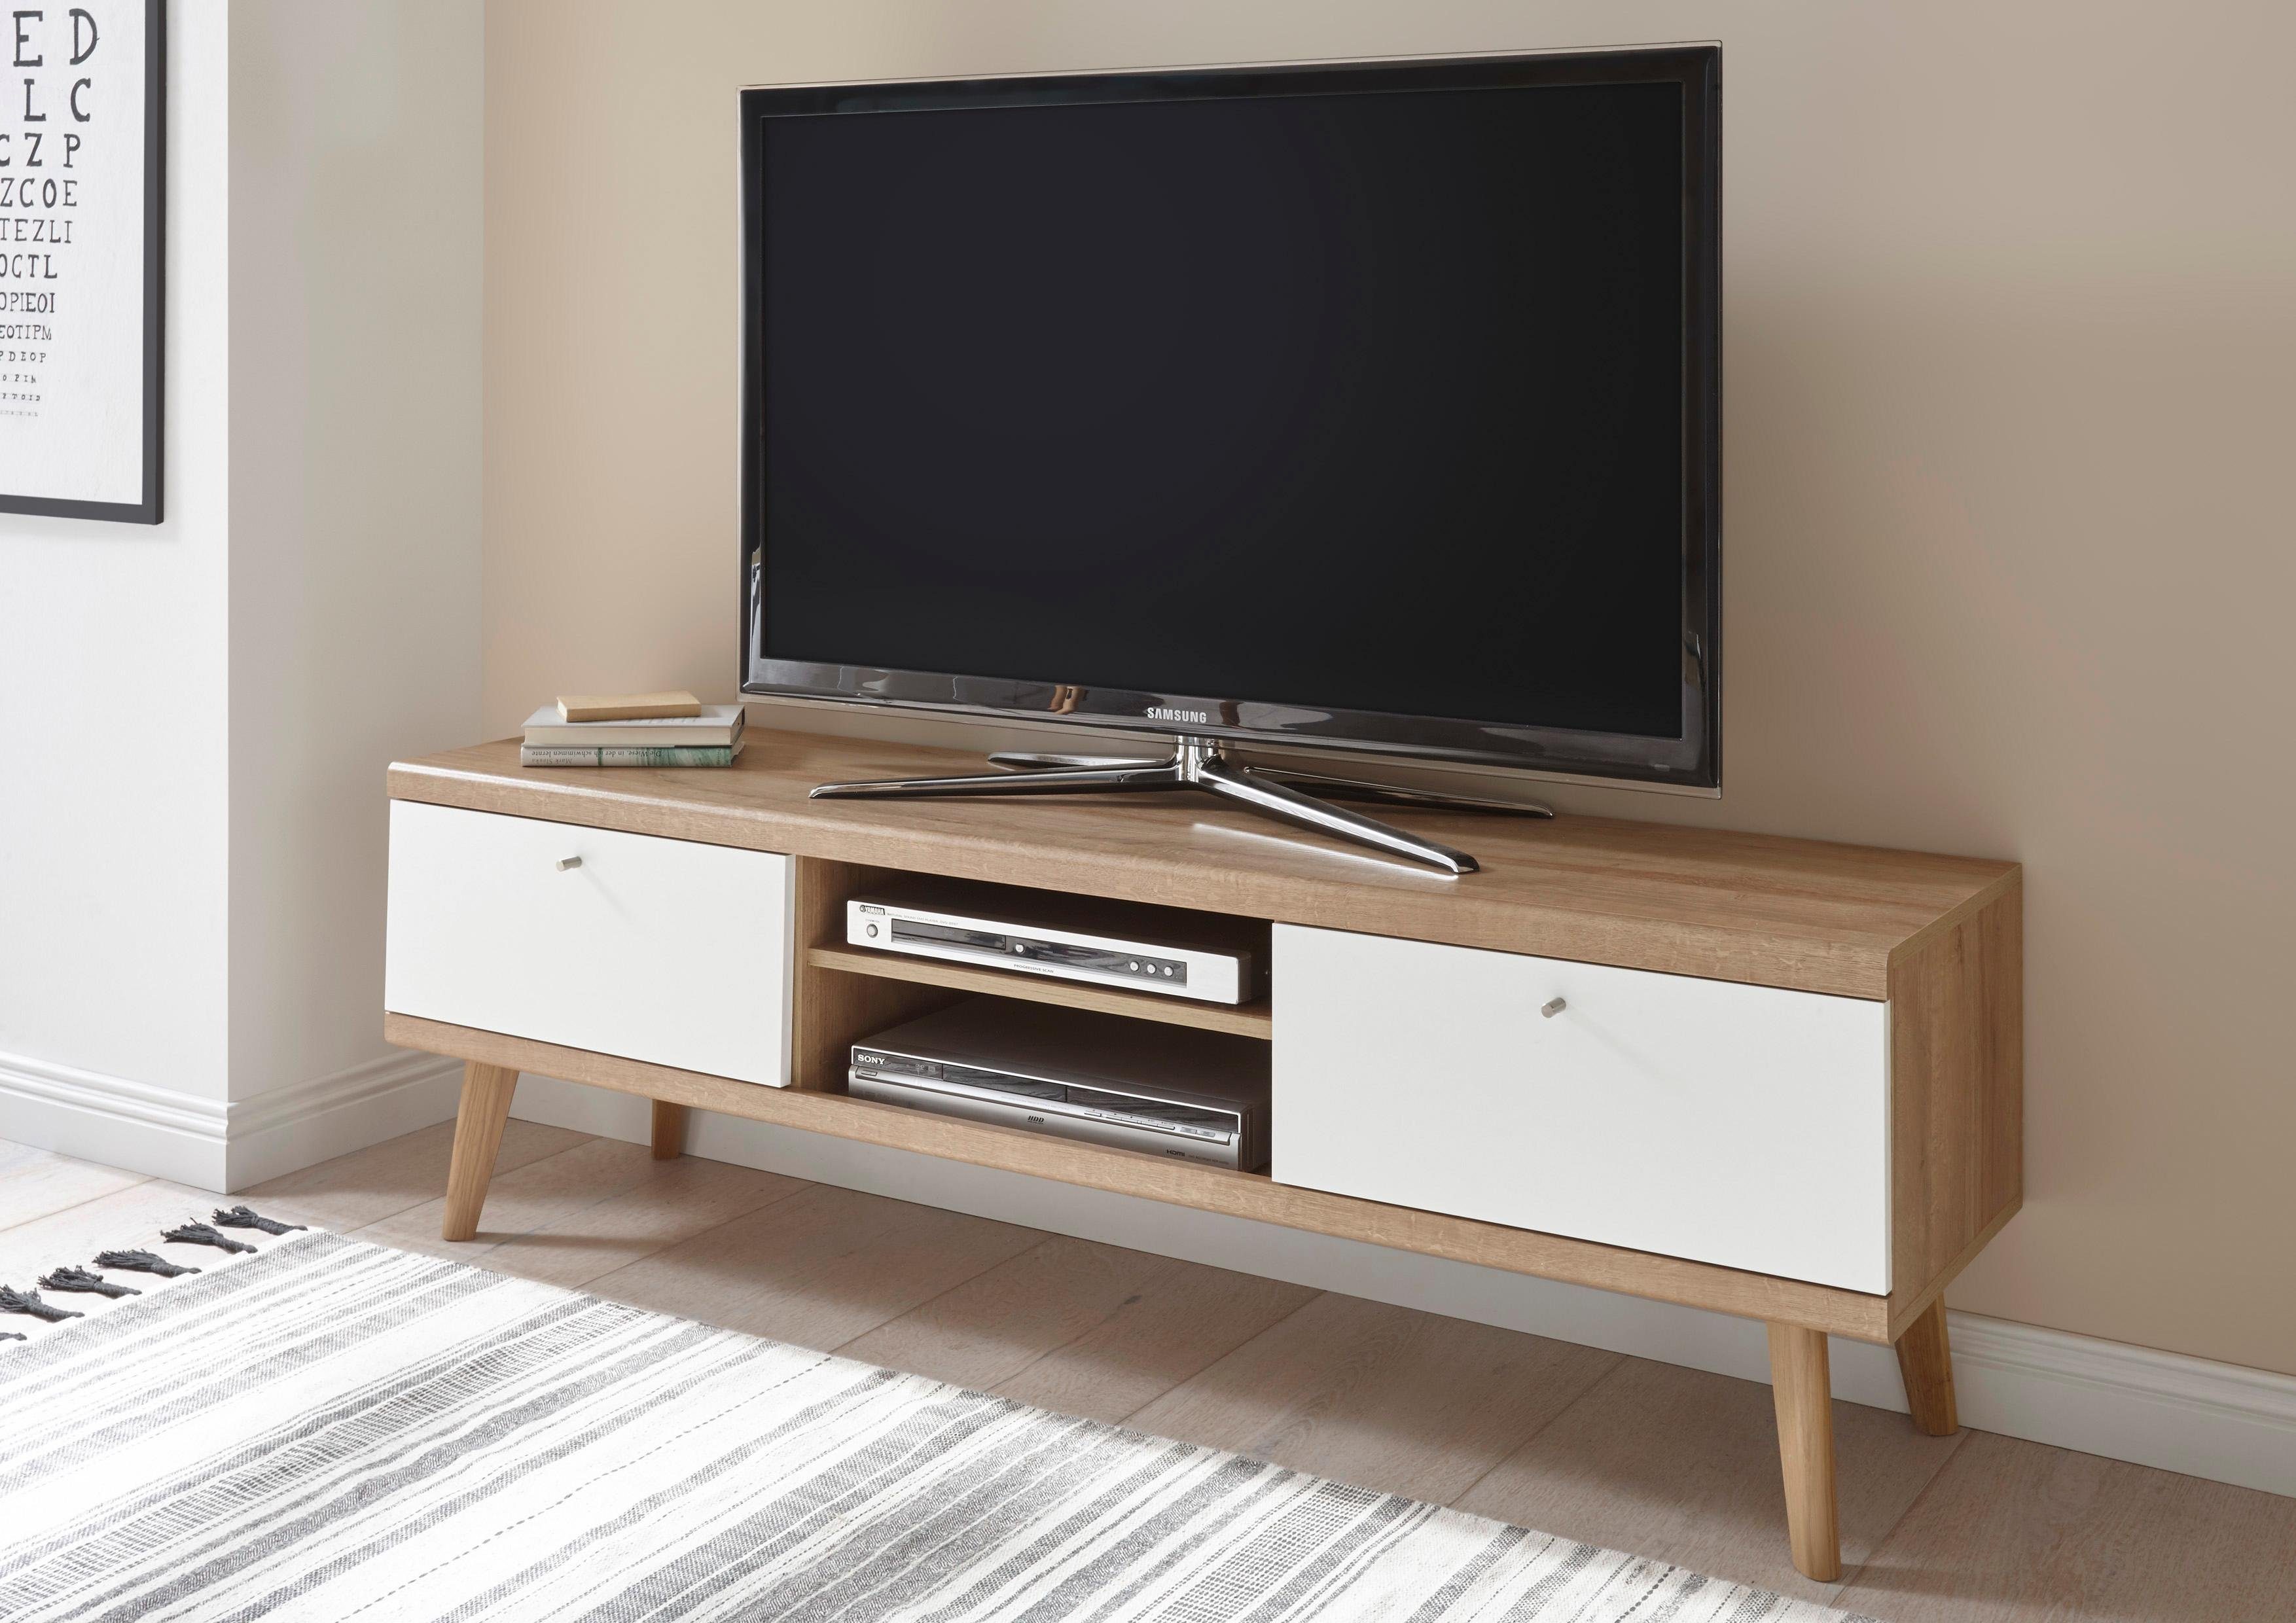 andas Tv-meubel MERLE Scandi design, breedte 160 cm, uit de freundin Home Collection